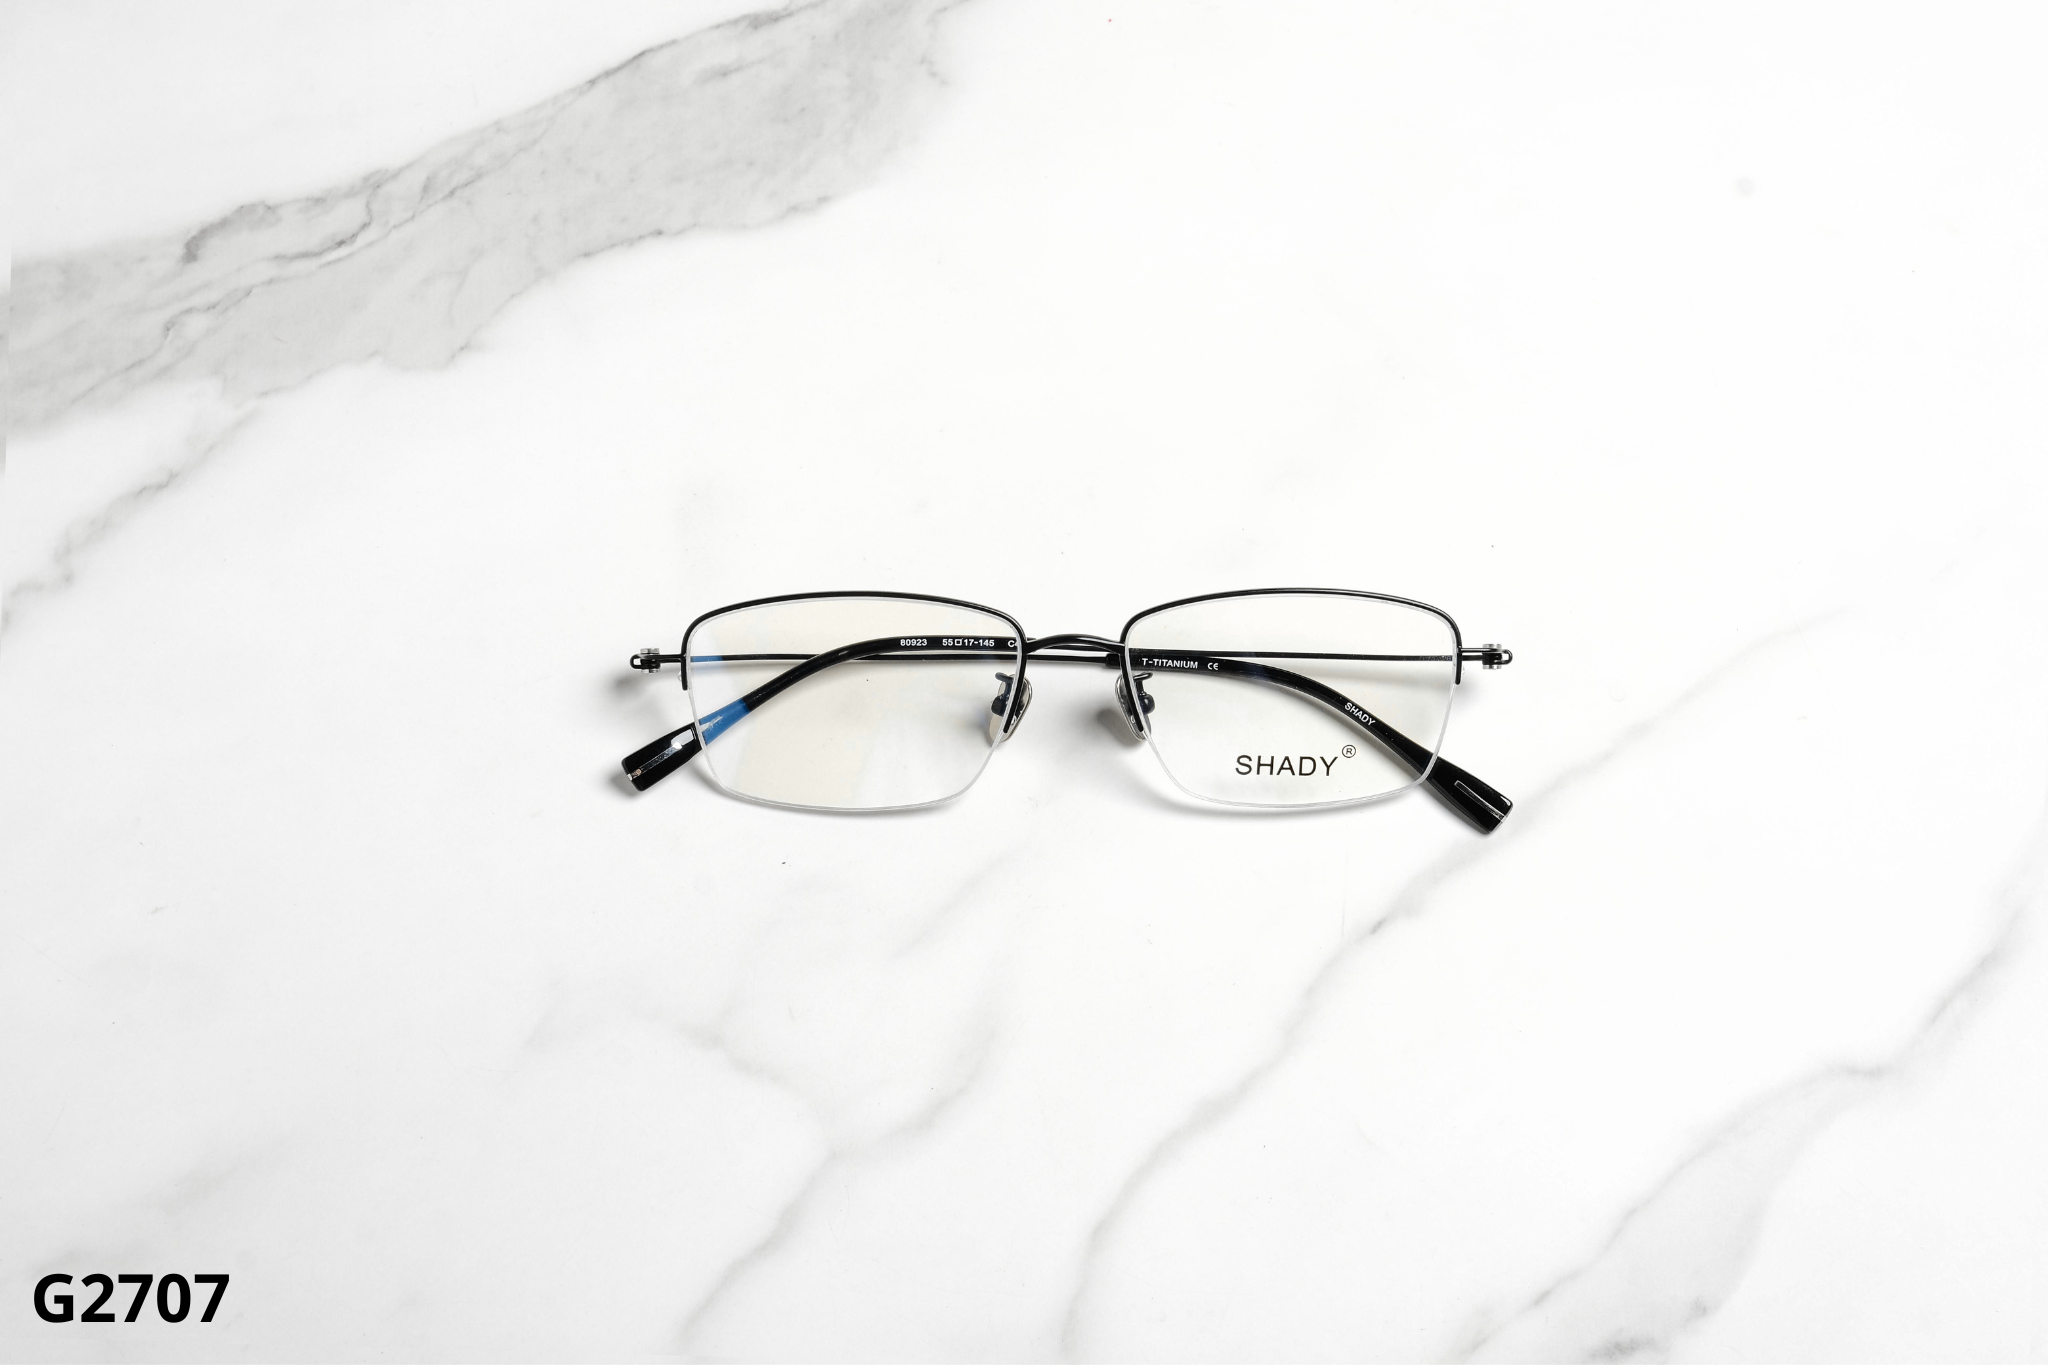  SHADY Eyewear - Glasses - G2707 